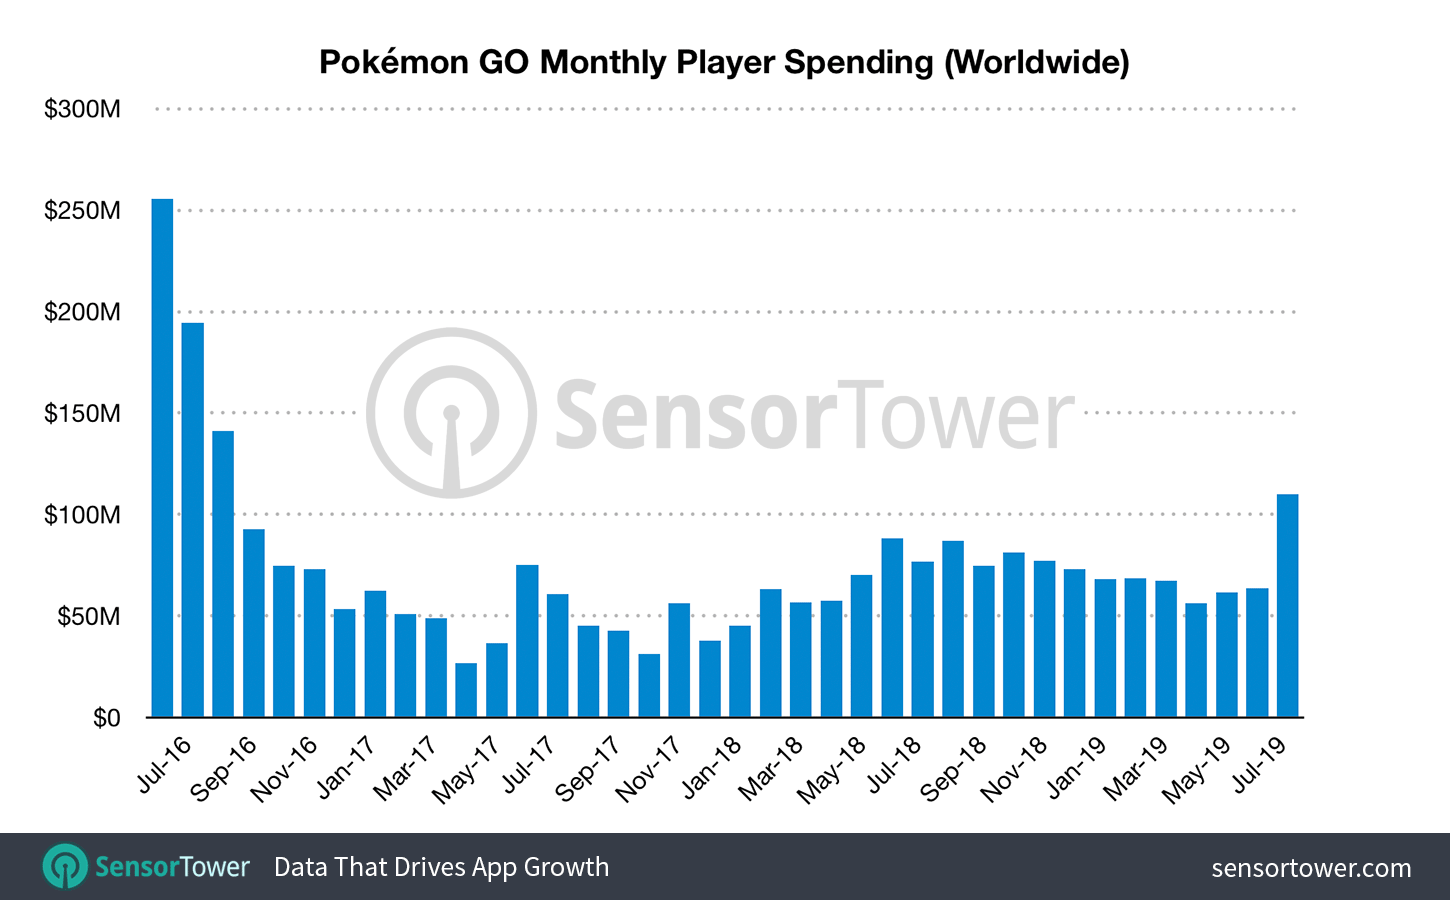 Pokémon GO Revenue from July 2016 Through August 2019